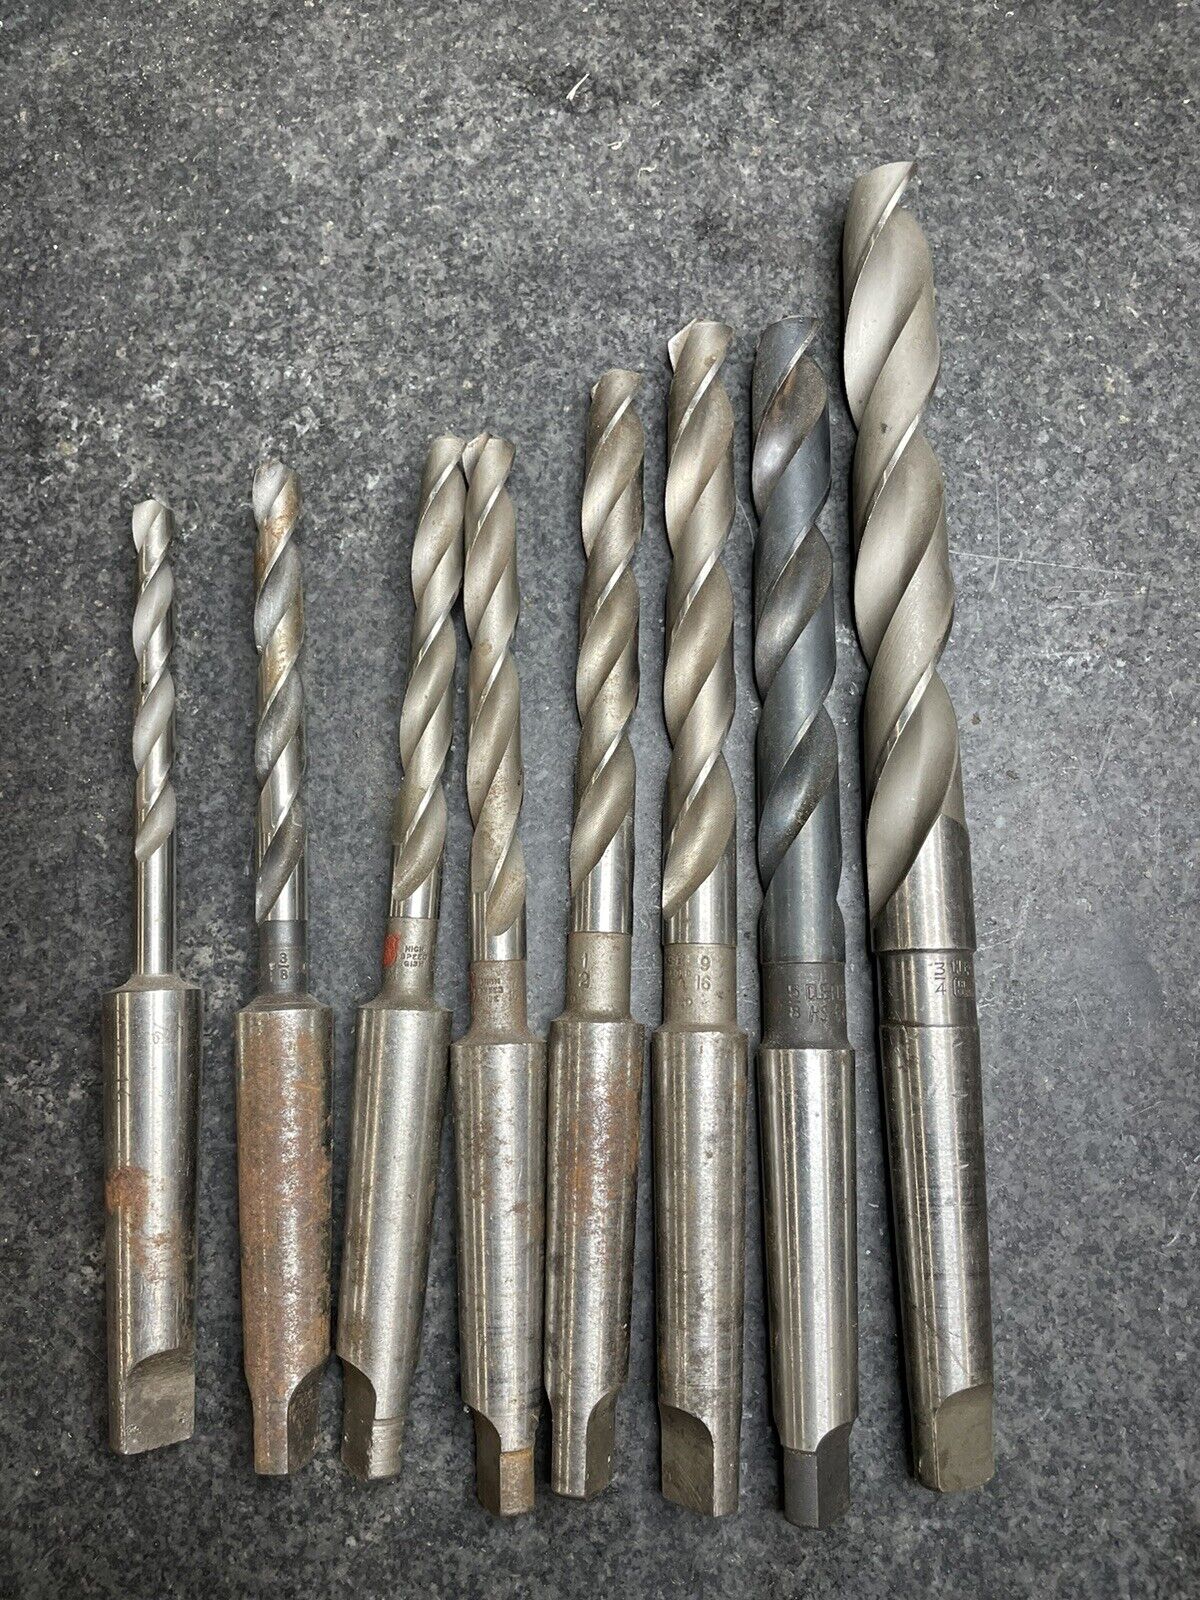 Number 2 morse taper drill bits 5/16” 3/8” 13/32” 7/16” 1/2” 9/16” 5/8”  3/4”